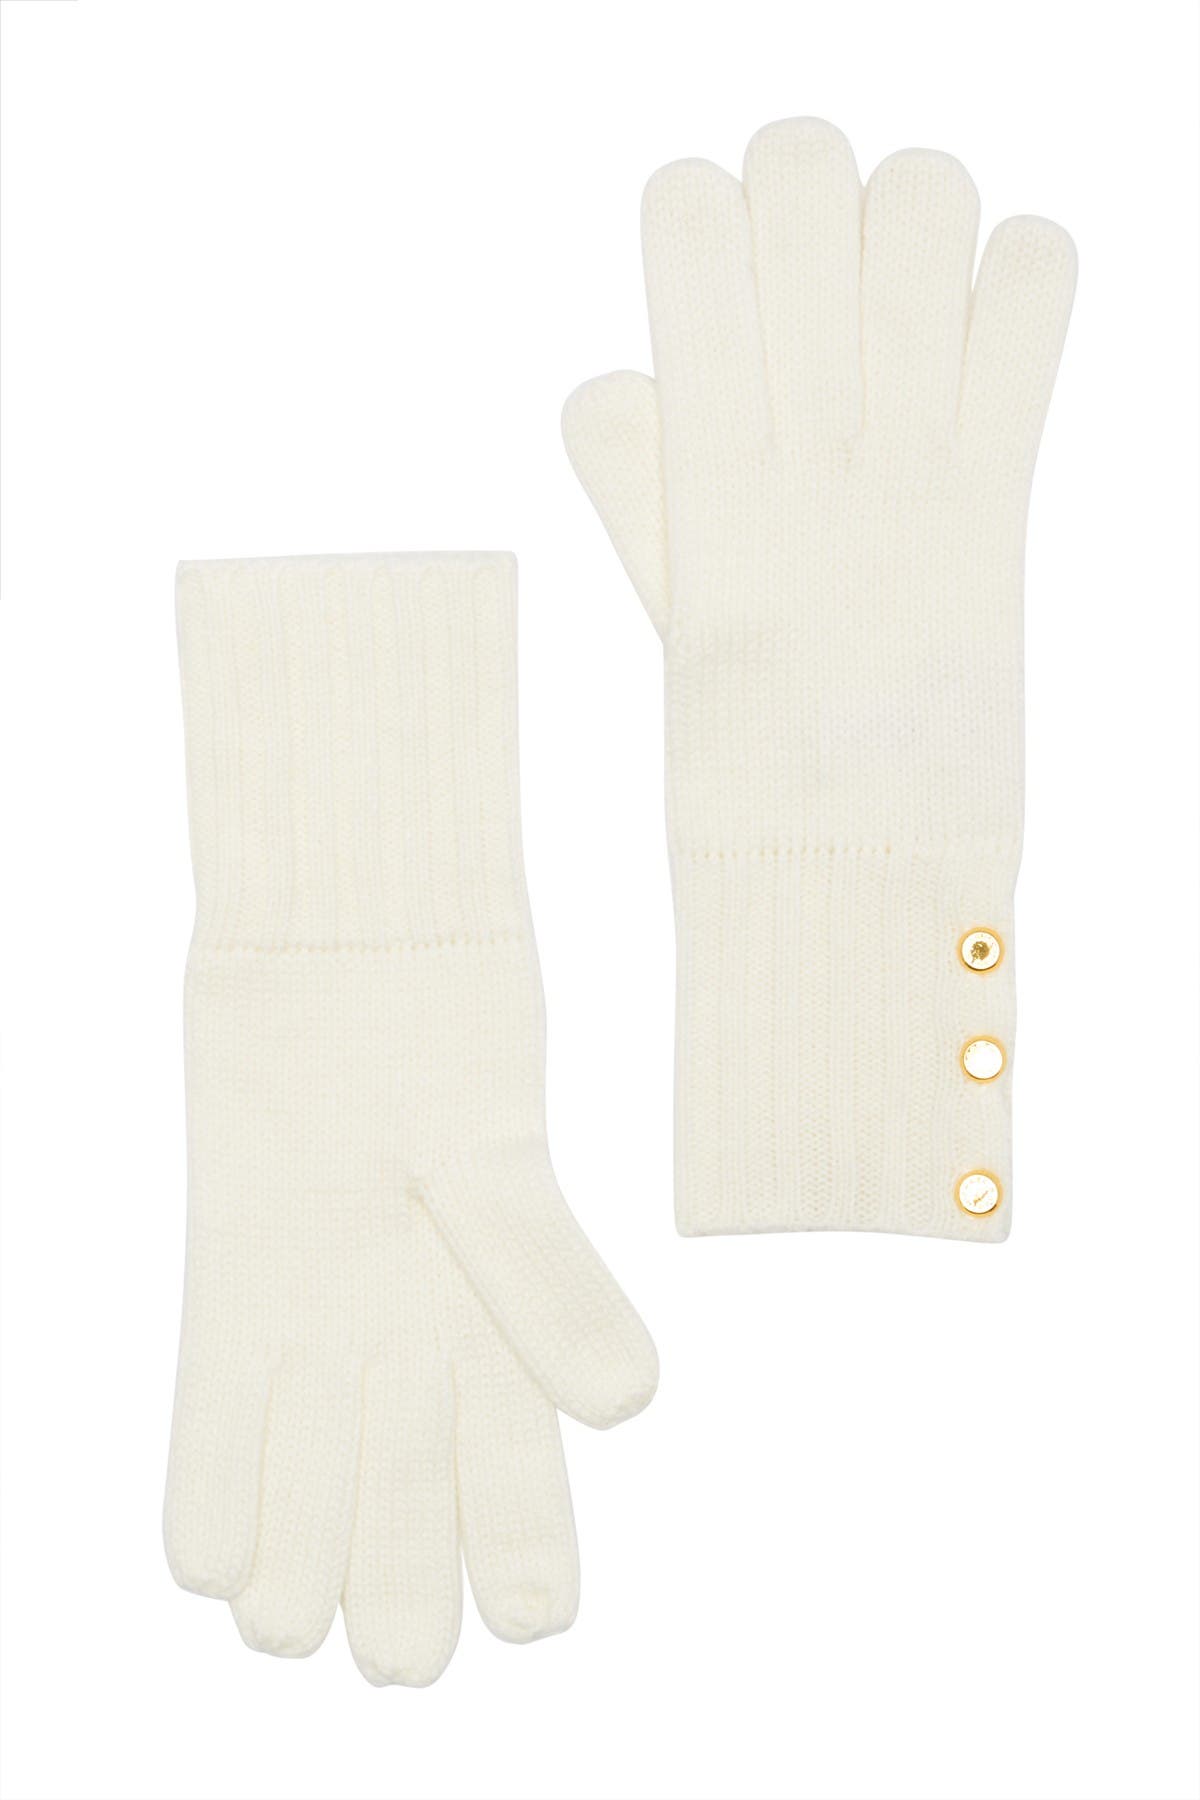 Michael Kors | Button Detailed Gloves 